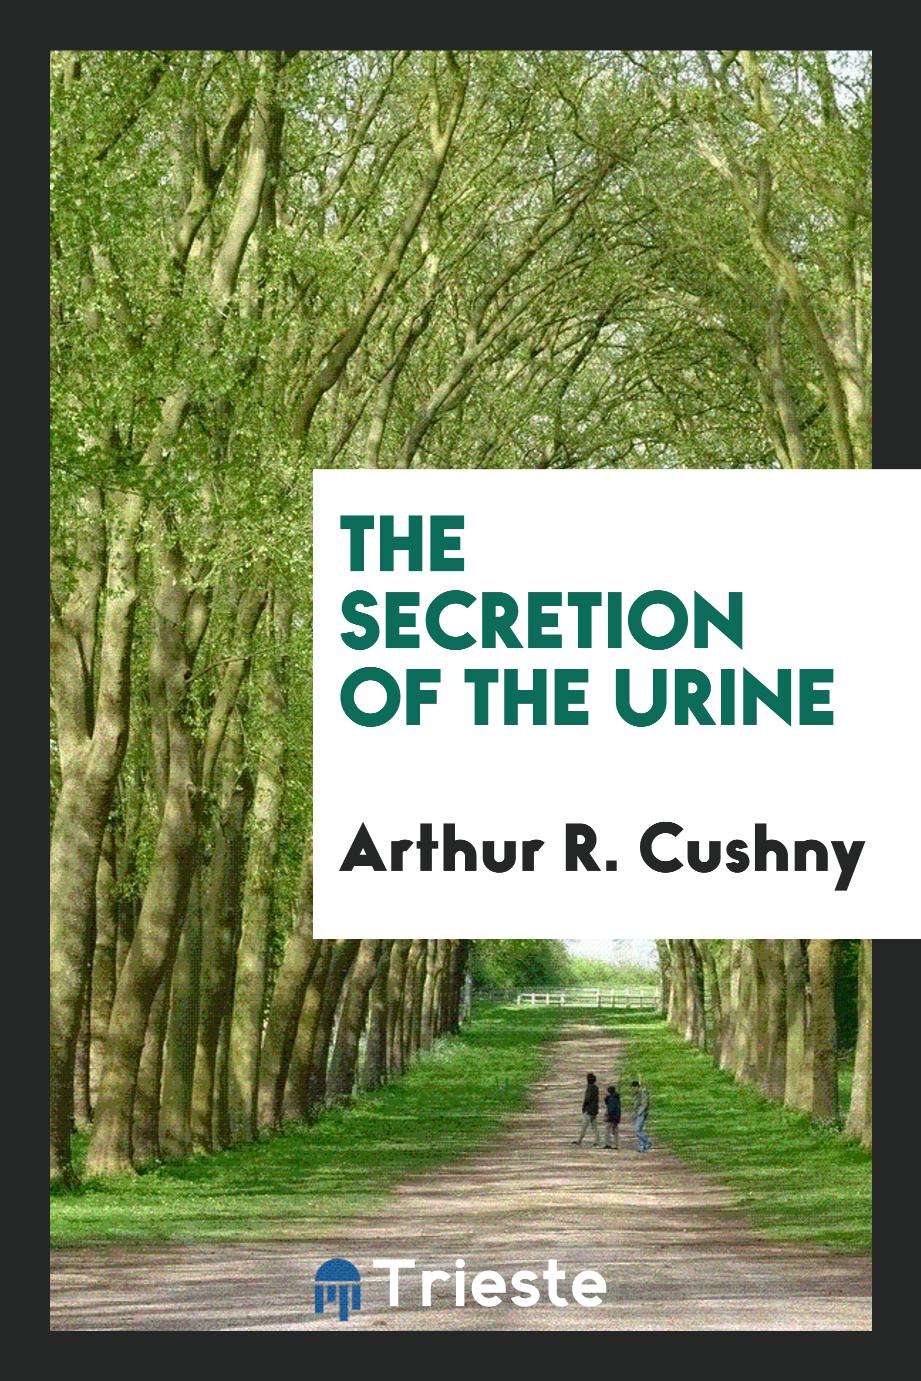 The secretion of the urine